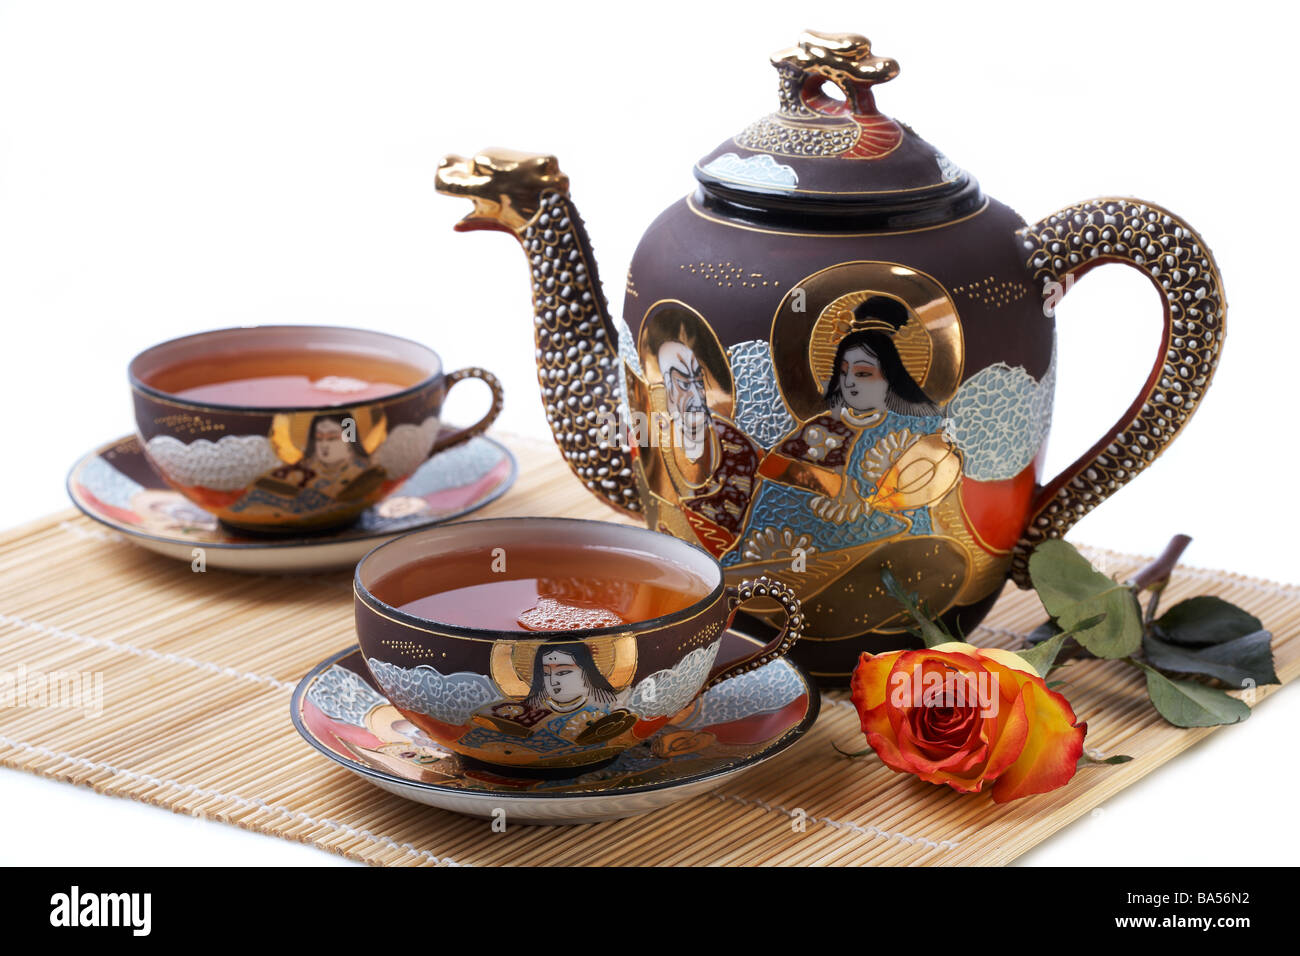 https://c8.alamy.com/comp/BA56N2/teaset-tea-cup-with-teapot-and-rose-BA56N2.jpg